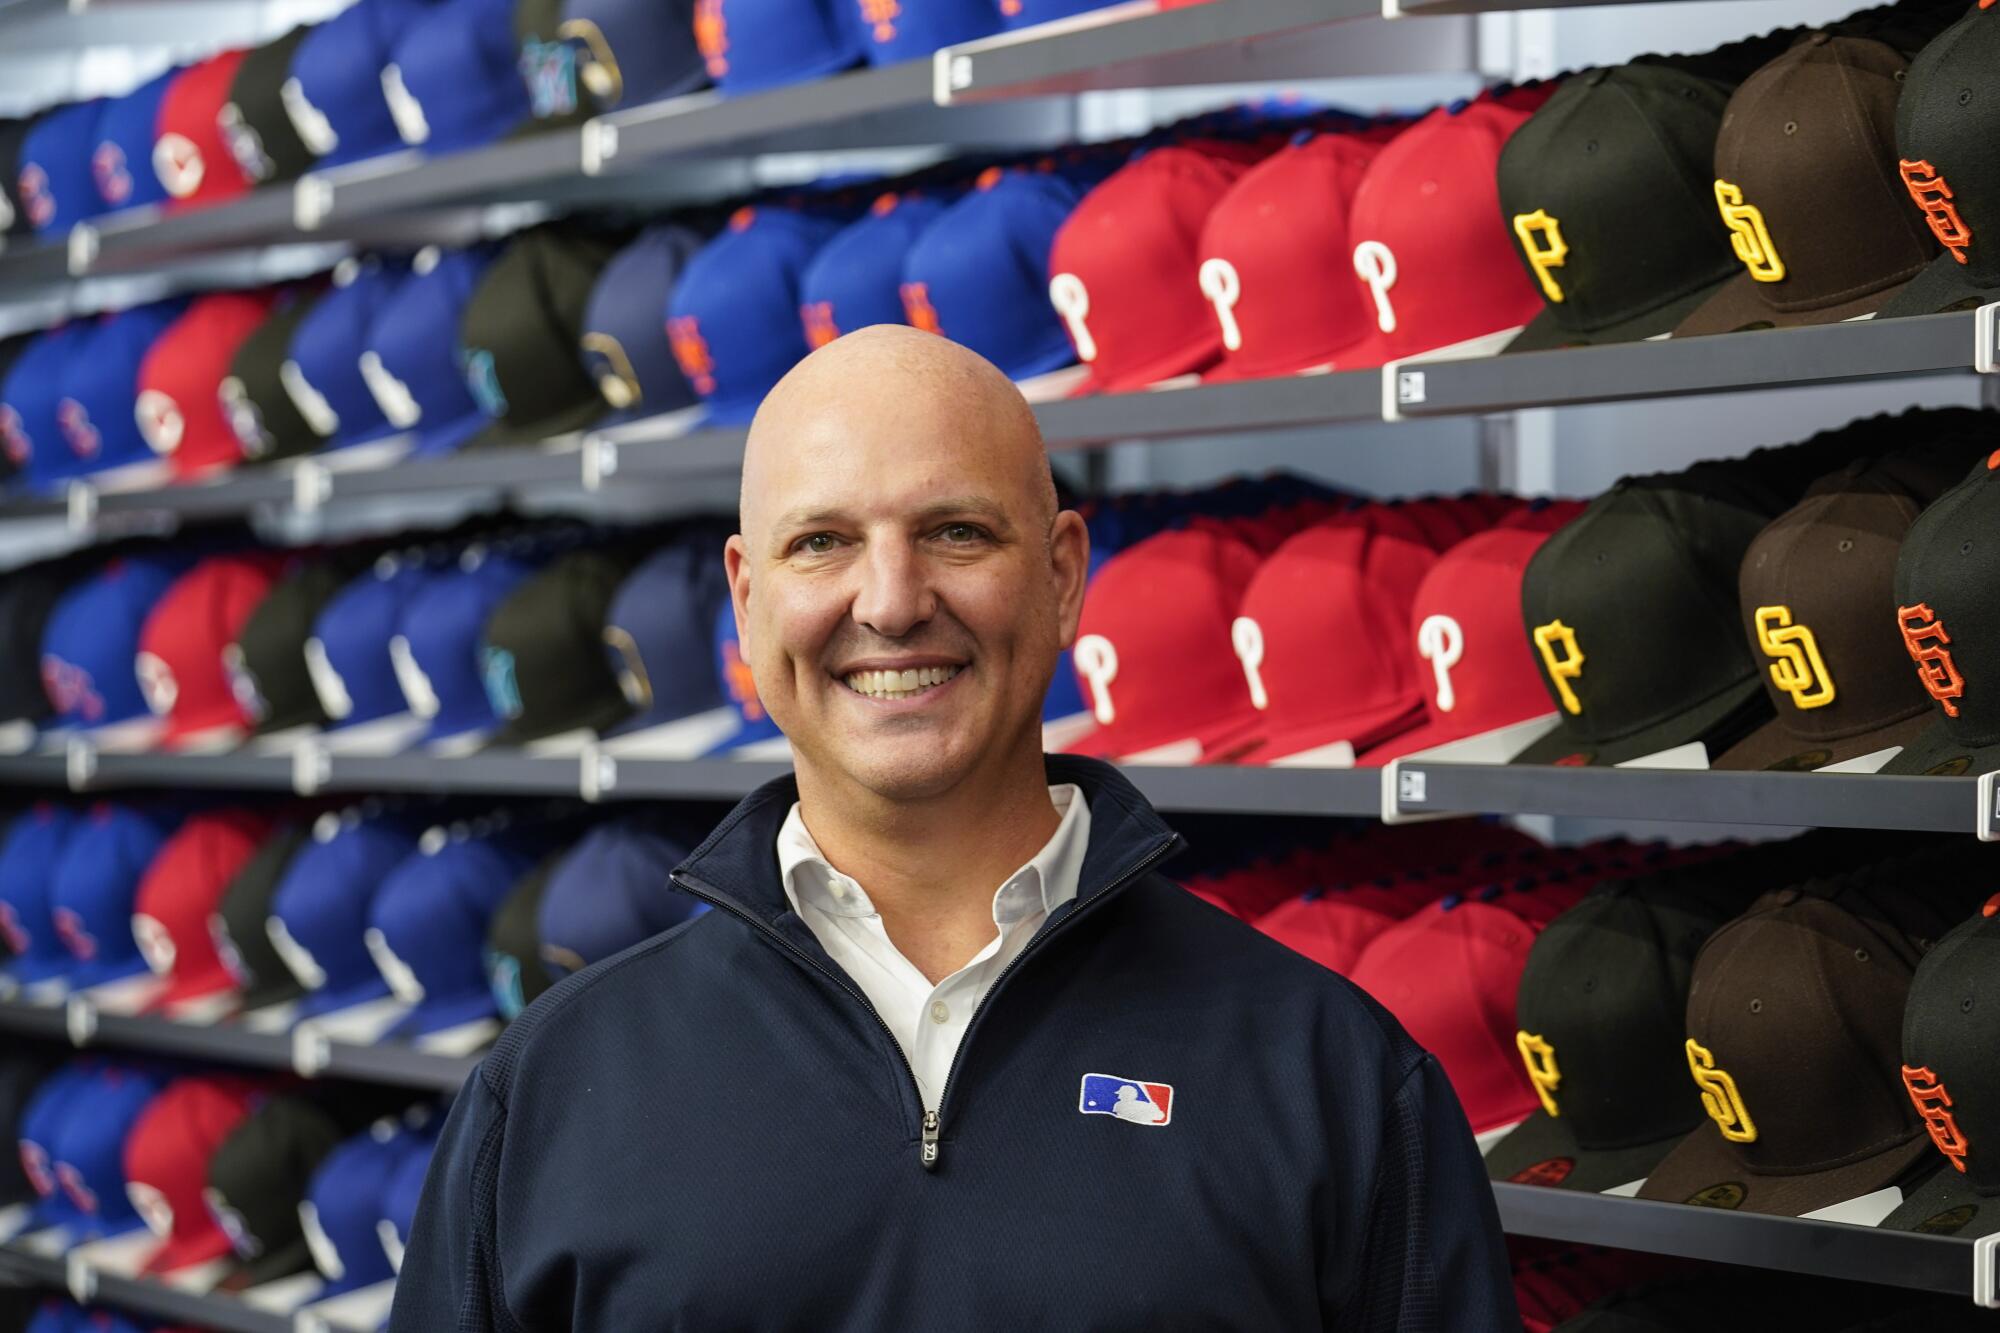 MLB 首席营收官诺亚·加登 (Noah Garden) 于 2020 年 9 月 30 日星期三在纽约 MLB 旗舰店摆姿势。